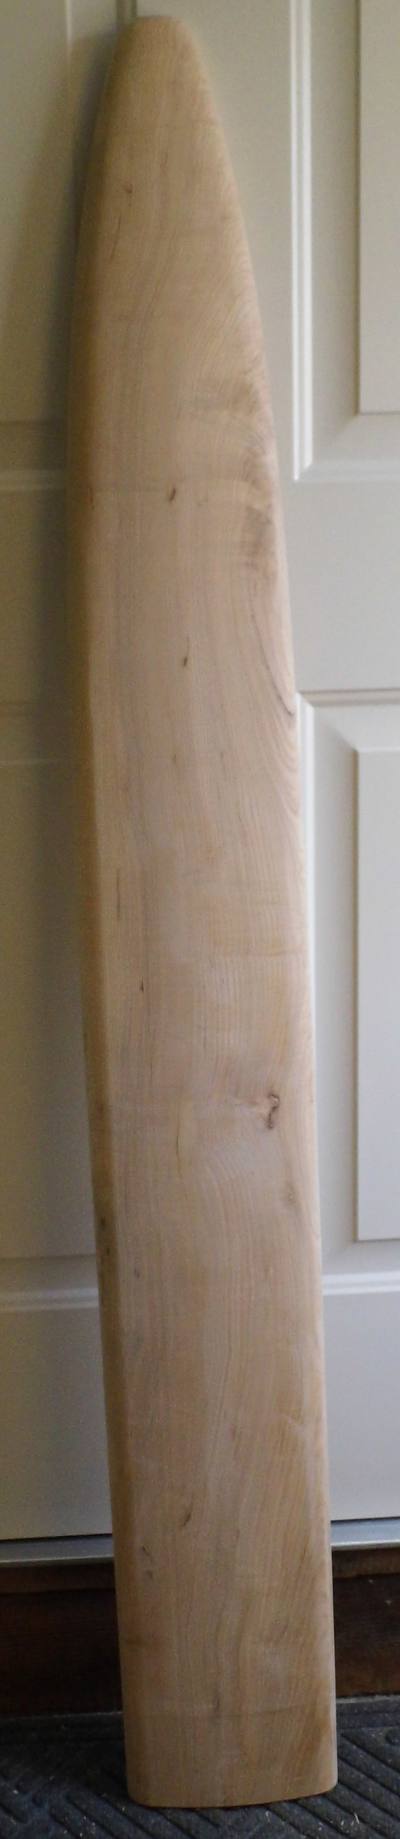 B-grade Fleshing Beam - 5 3/4 wide x 57-59 inches long